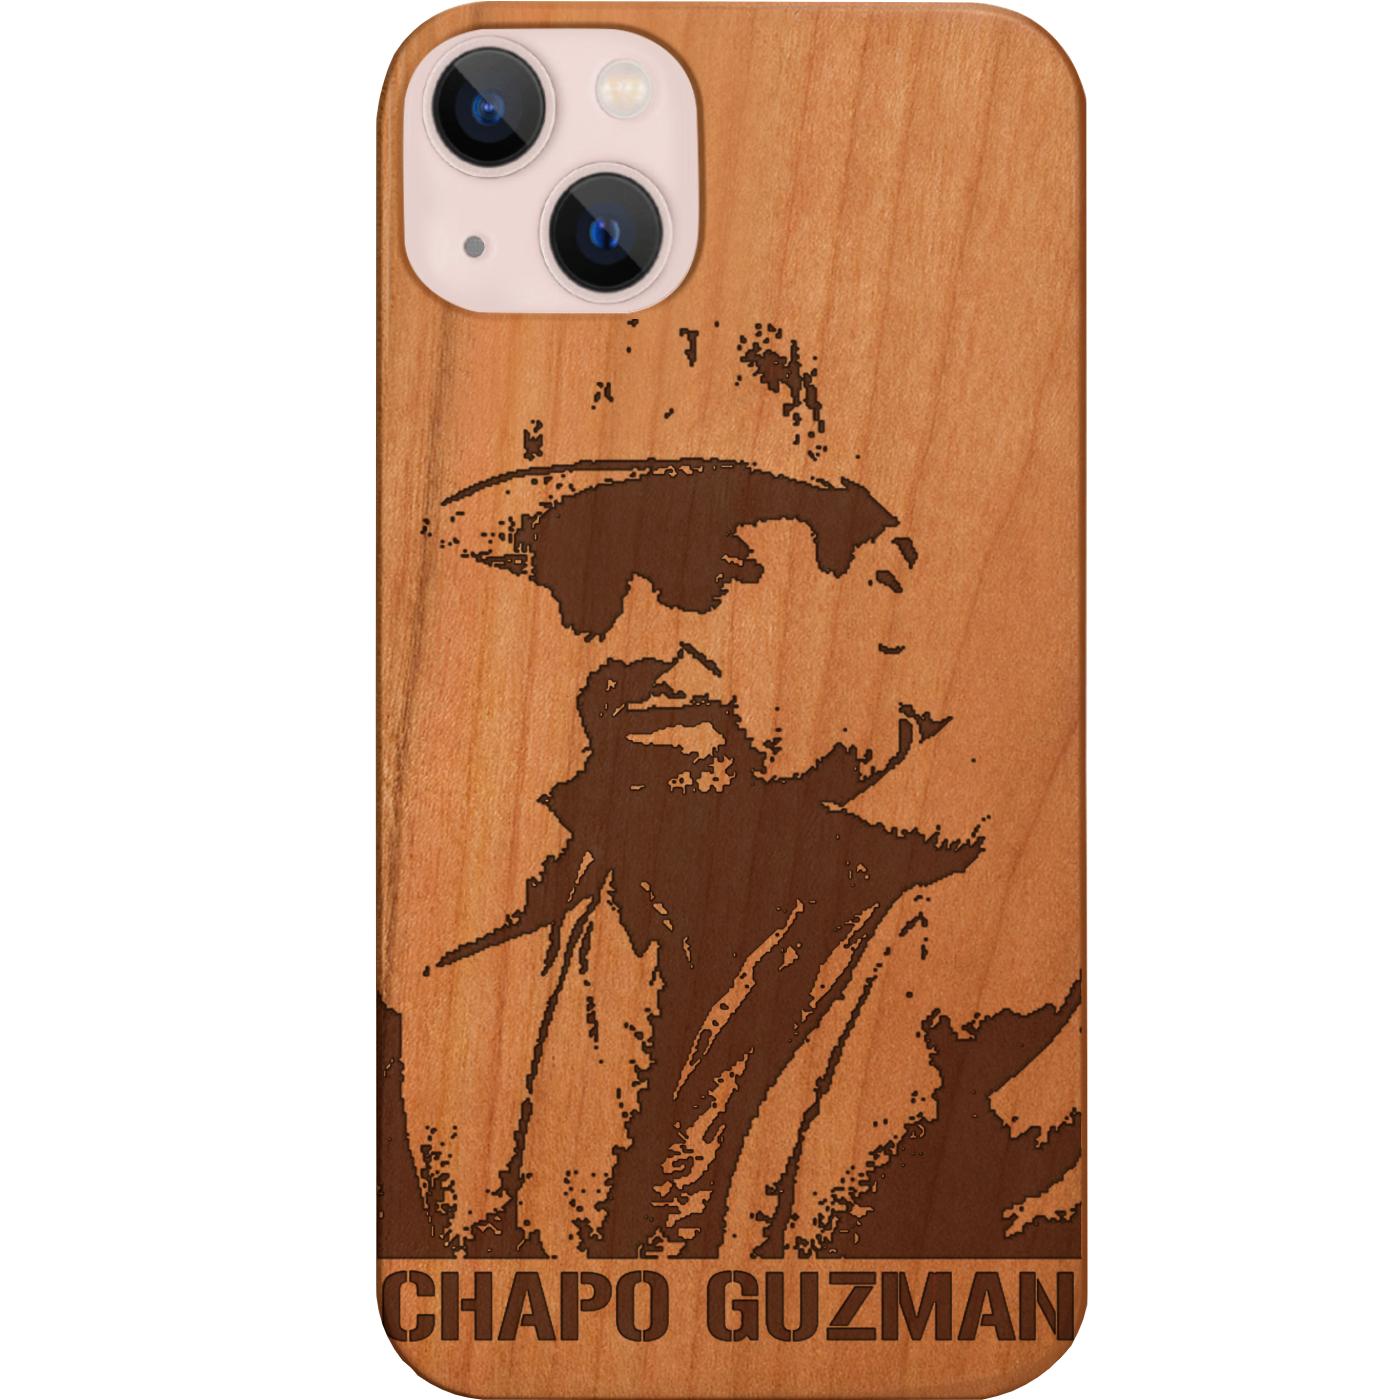 Chapo Guzman - Engraved Phone Case